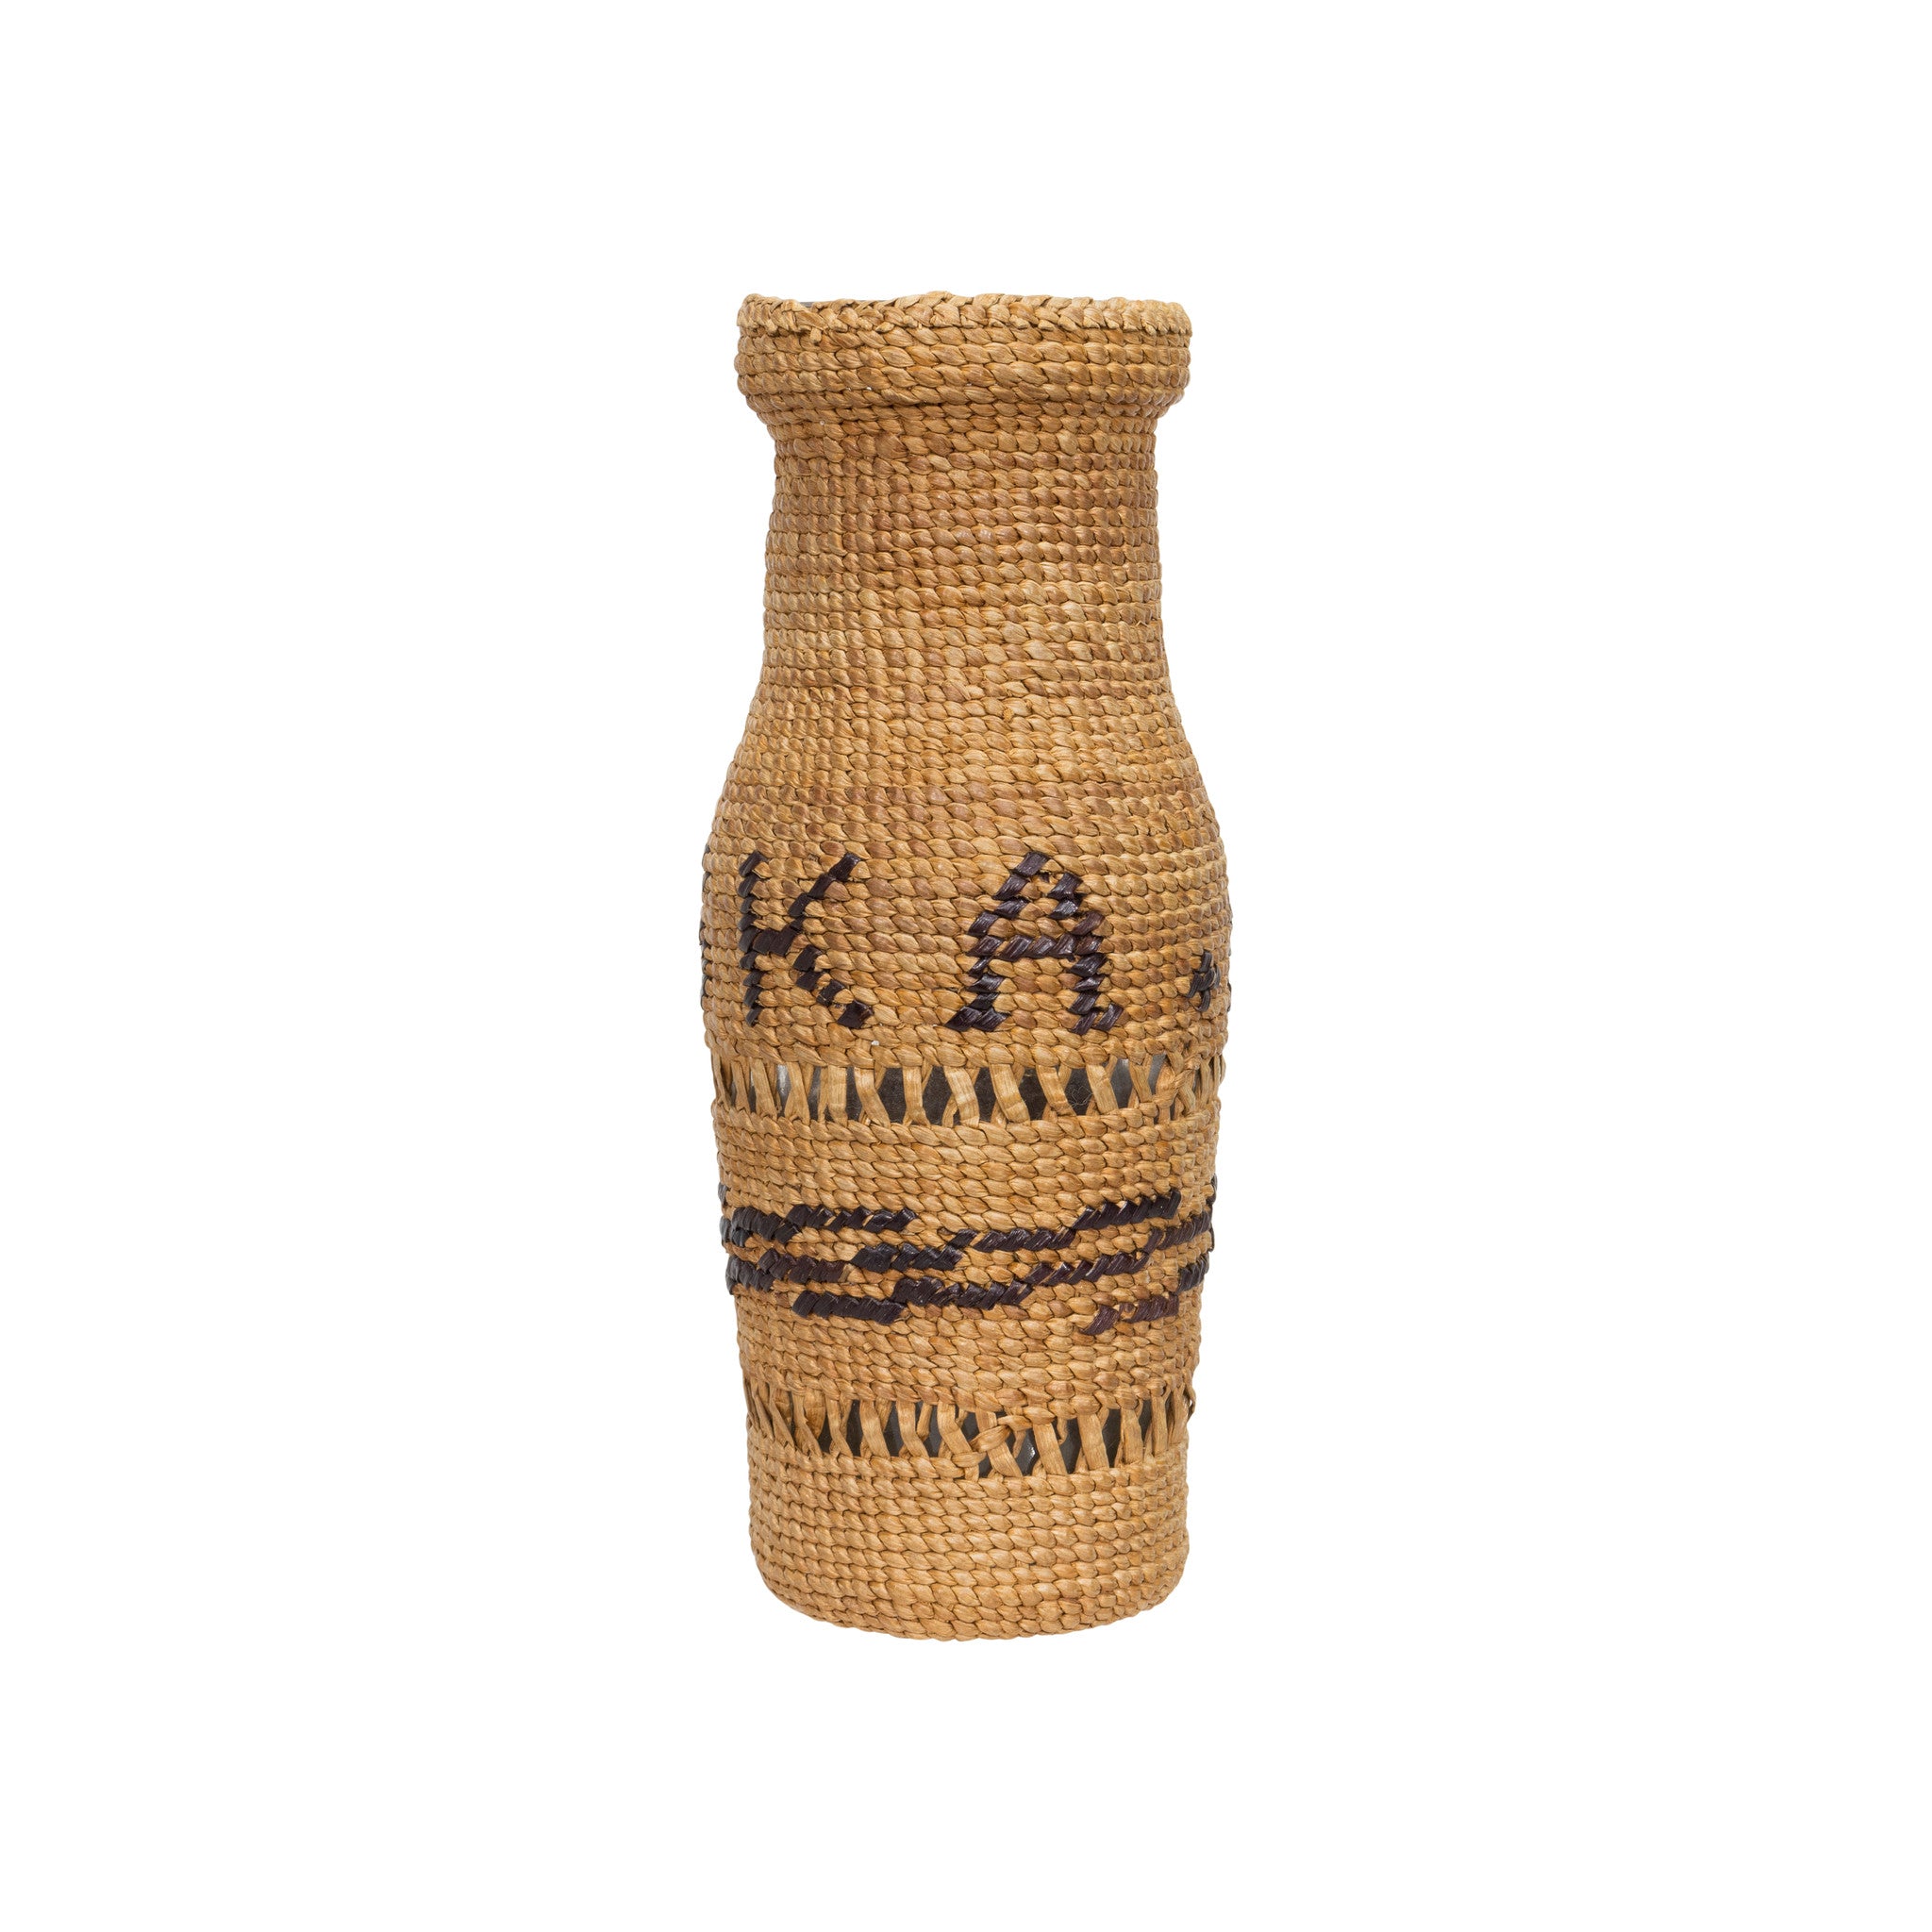 Tsimshian Bottle Basket